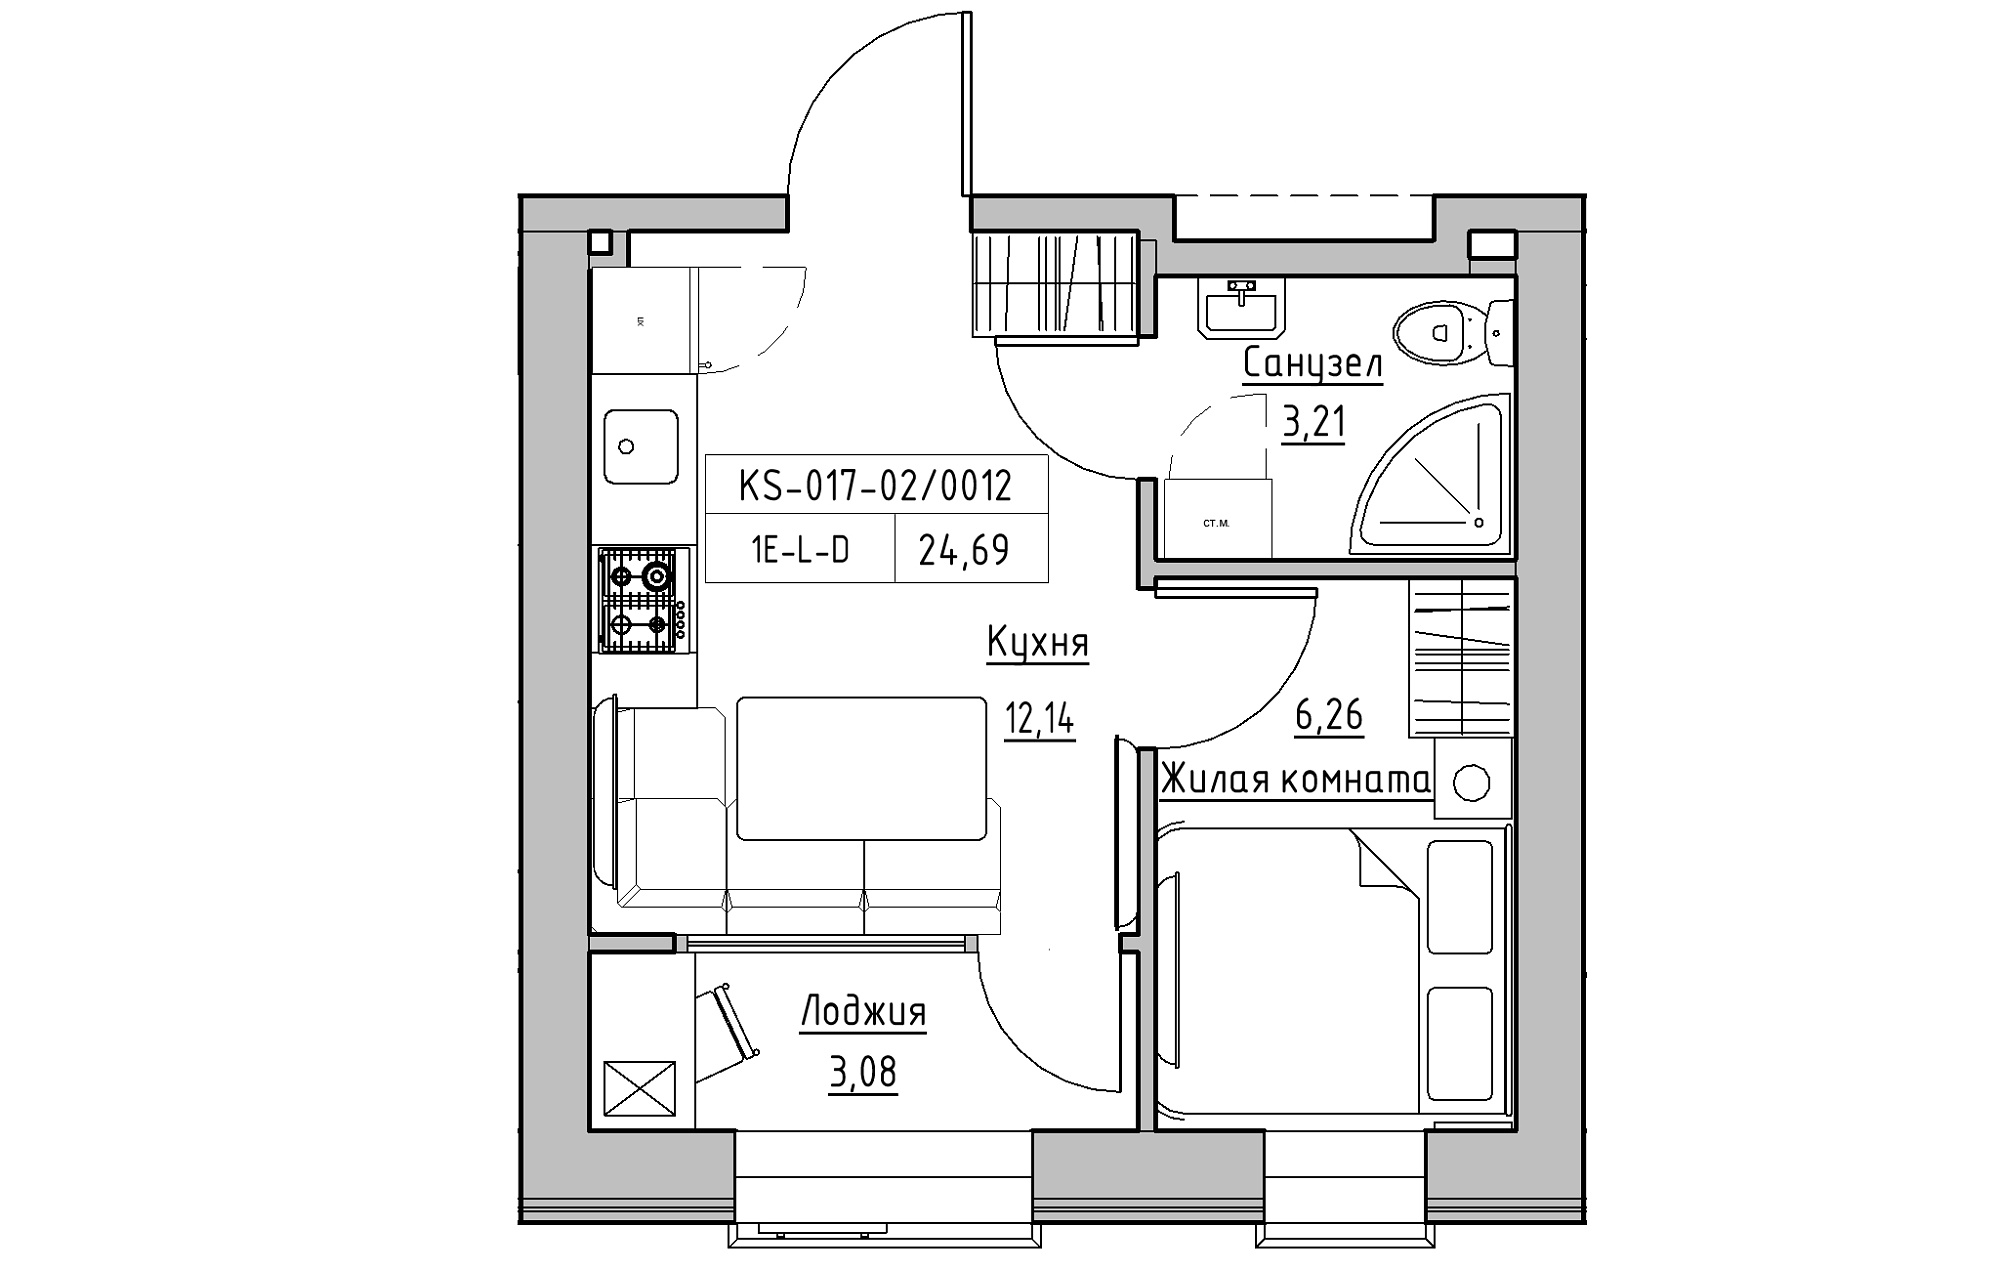 Planning 1-rm flats area 24.69m2, KS-017-02/0012.